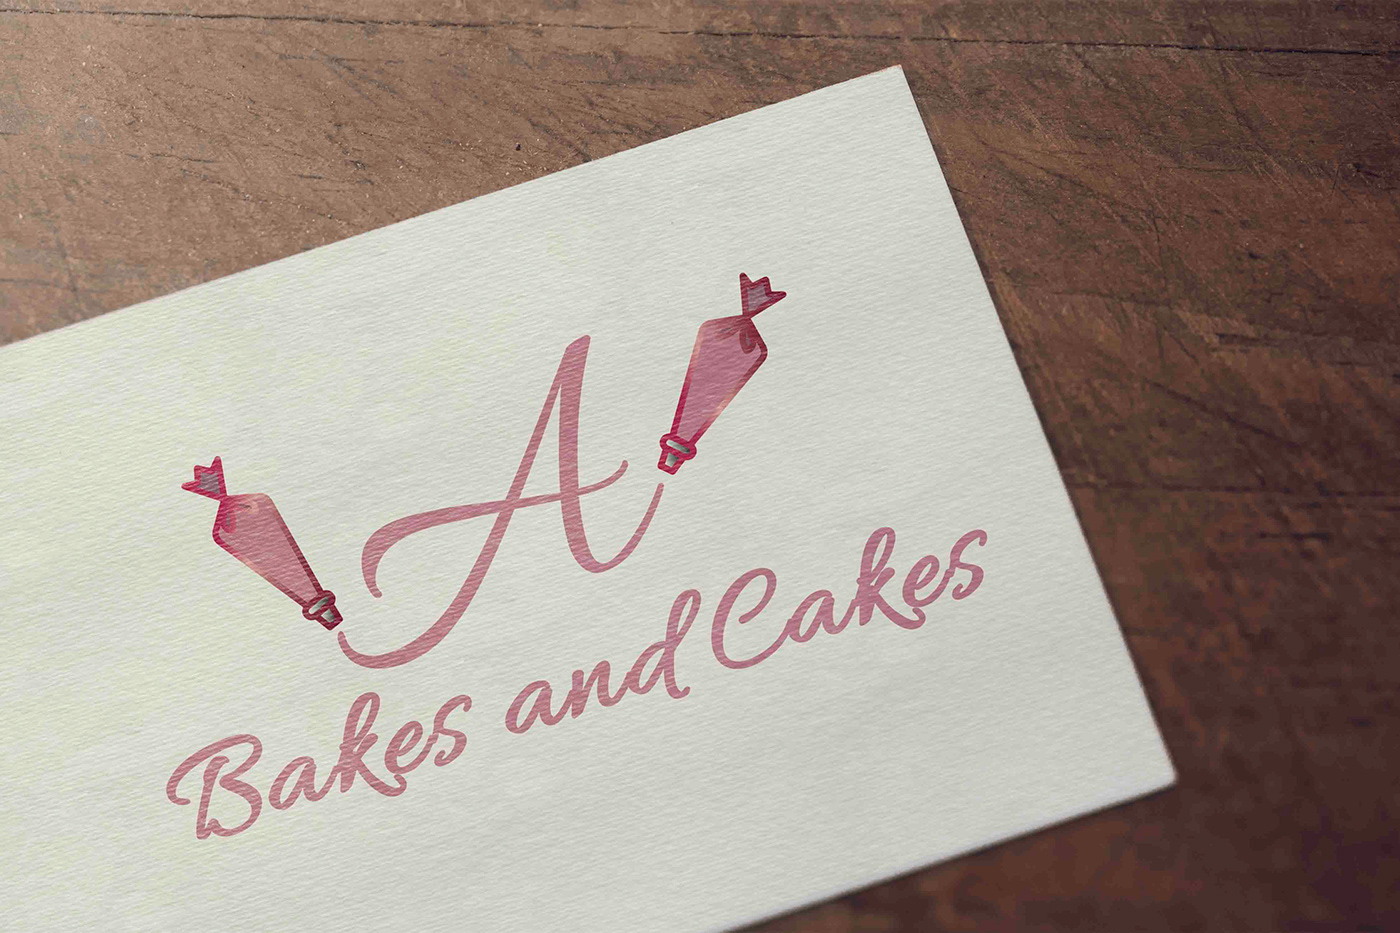 america bake brand cafe cake design logo